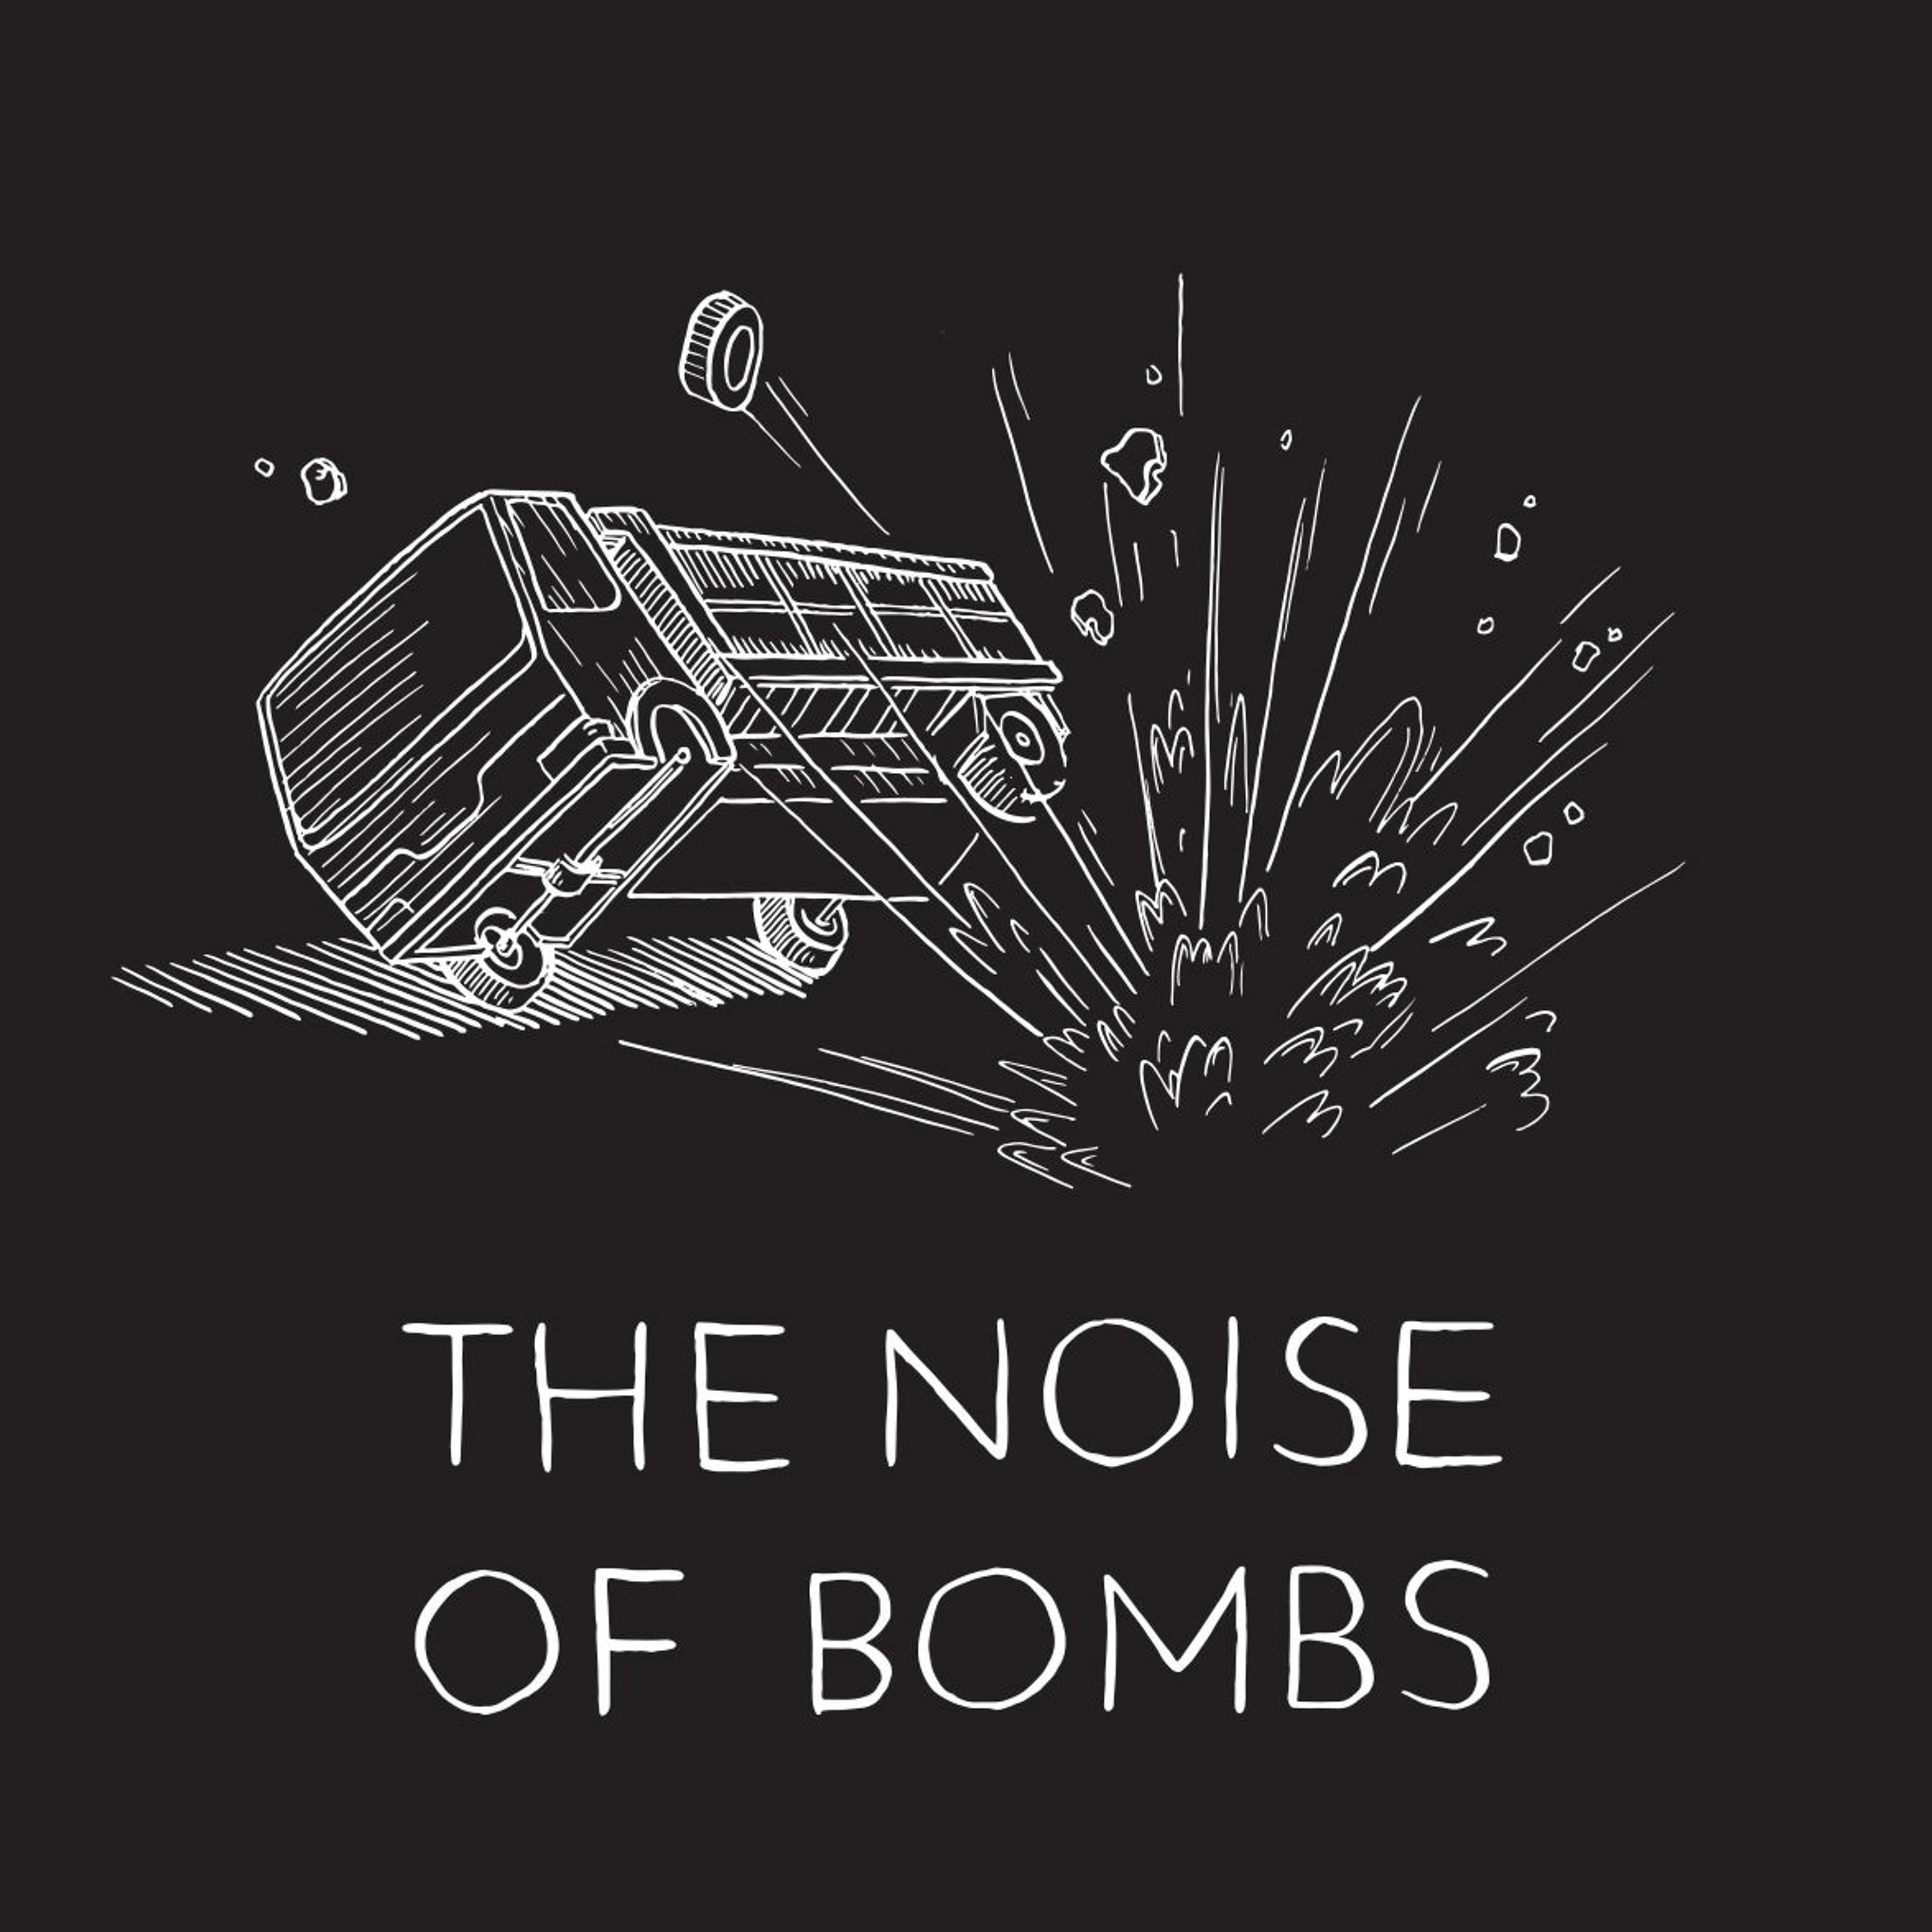 INSIDE YEMEN #1: The noise of bombs